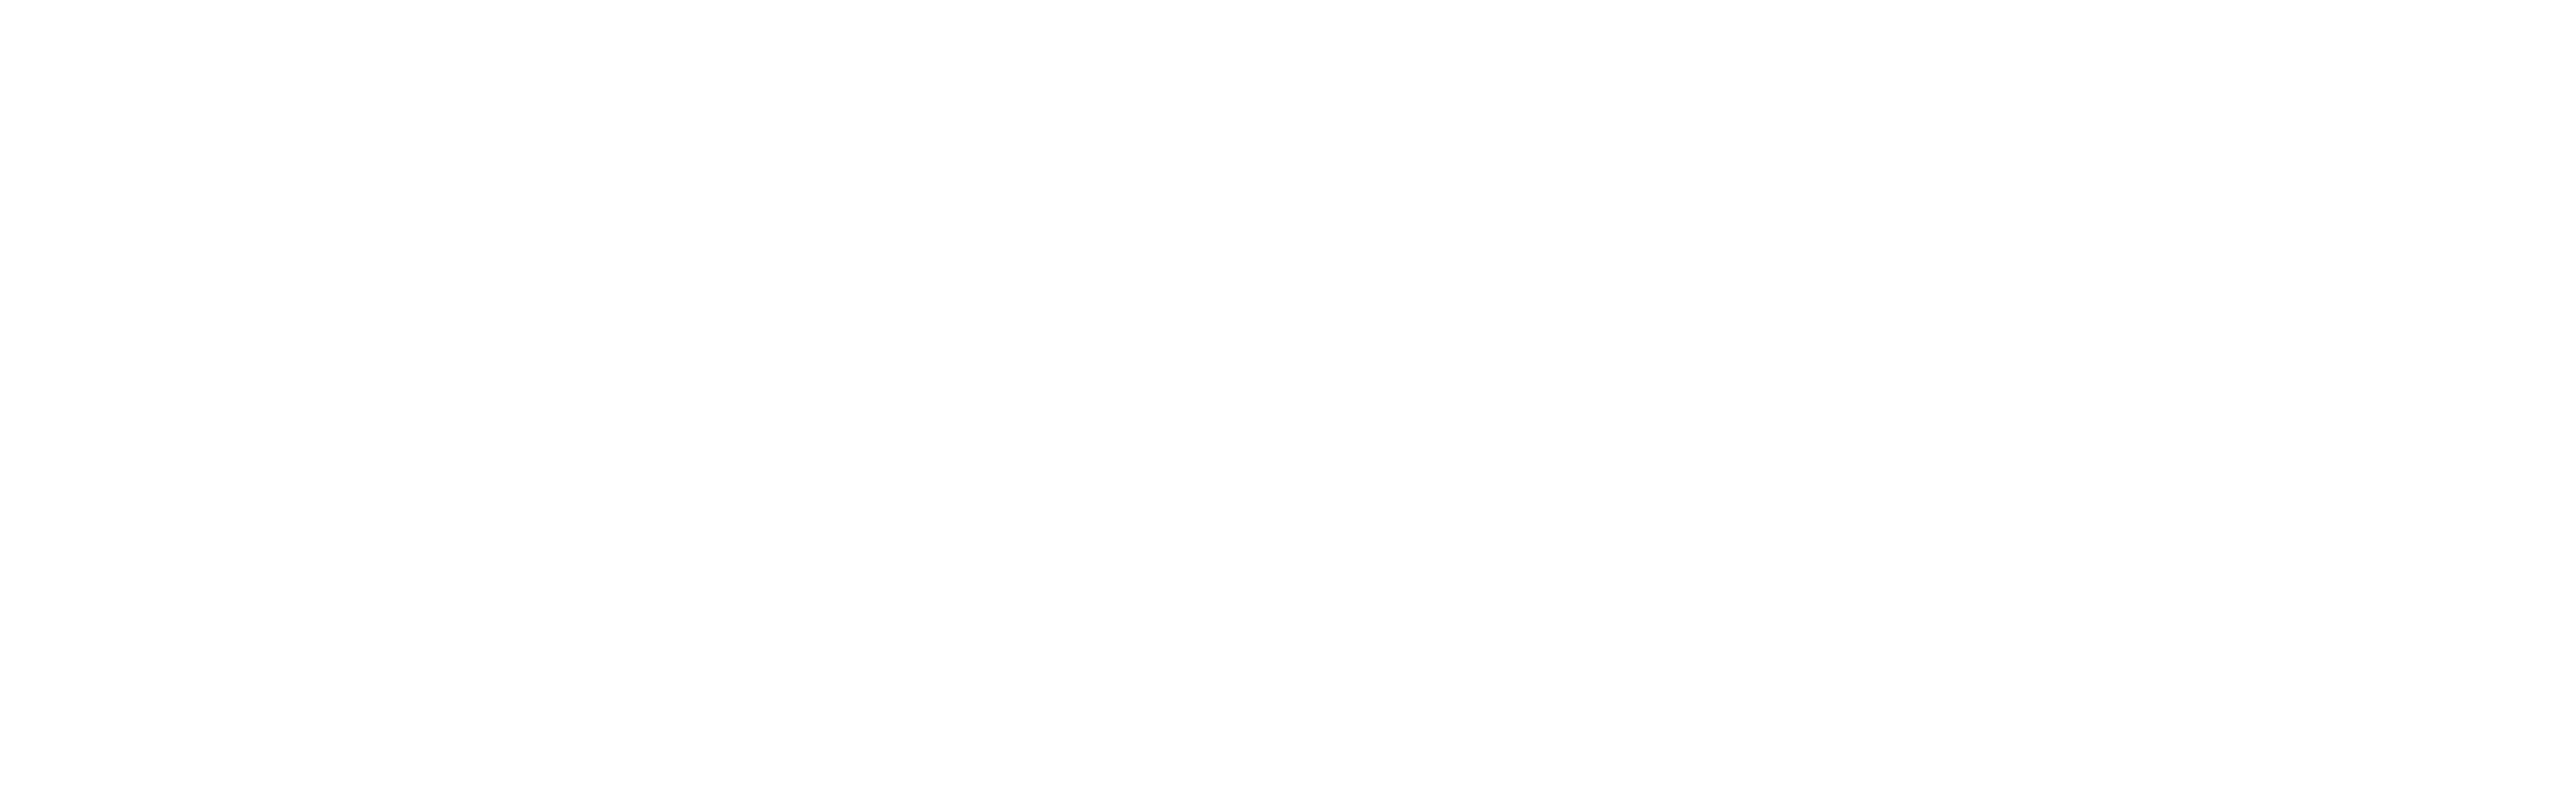 Microsoft Azure logo-white